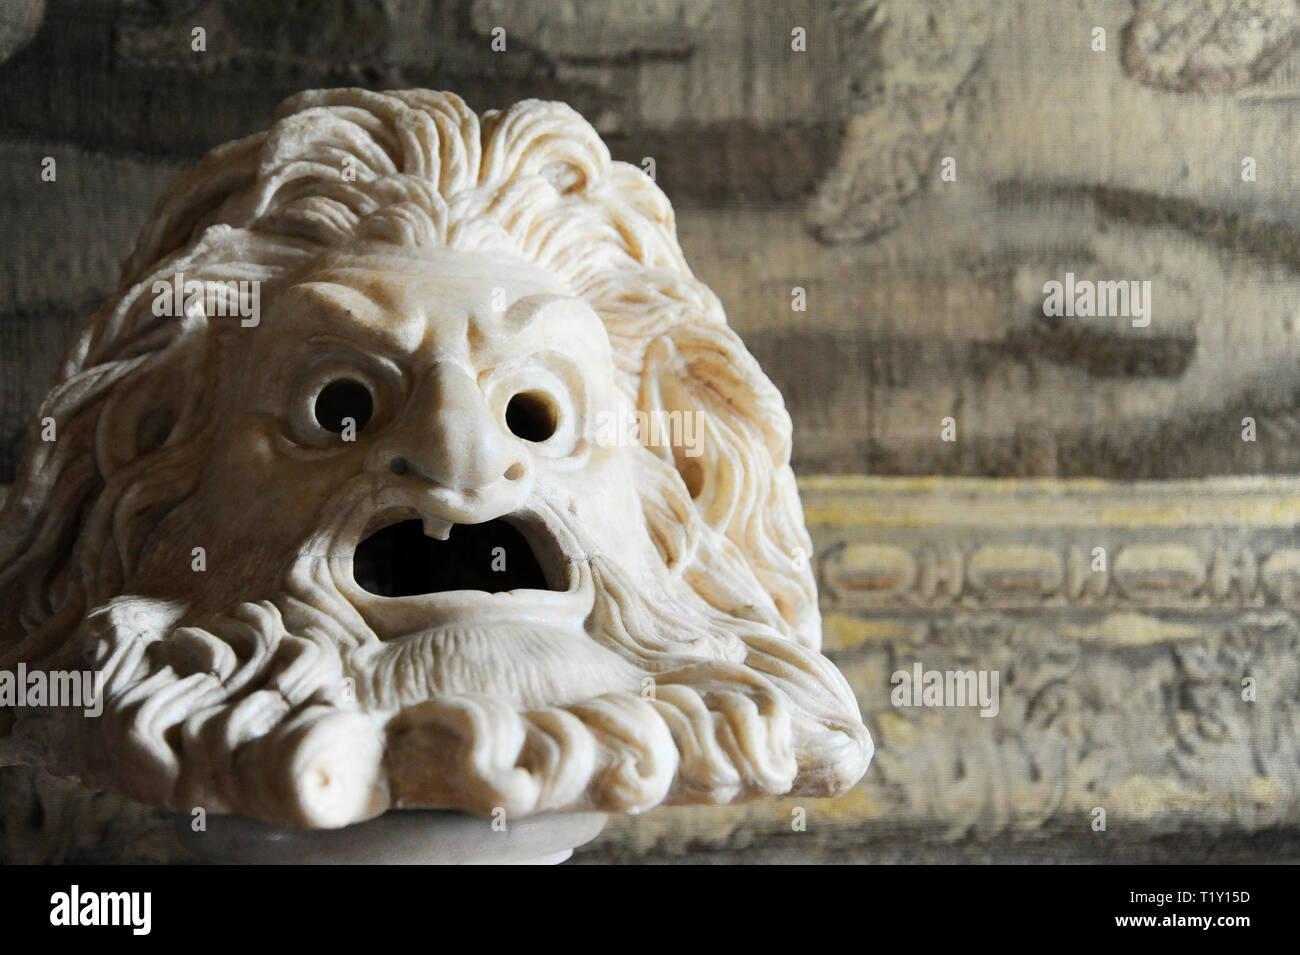 Greek or roman stlye theater mask sculpture Stock Photo